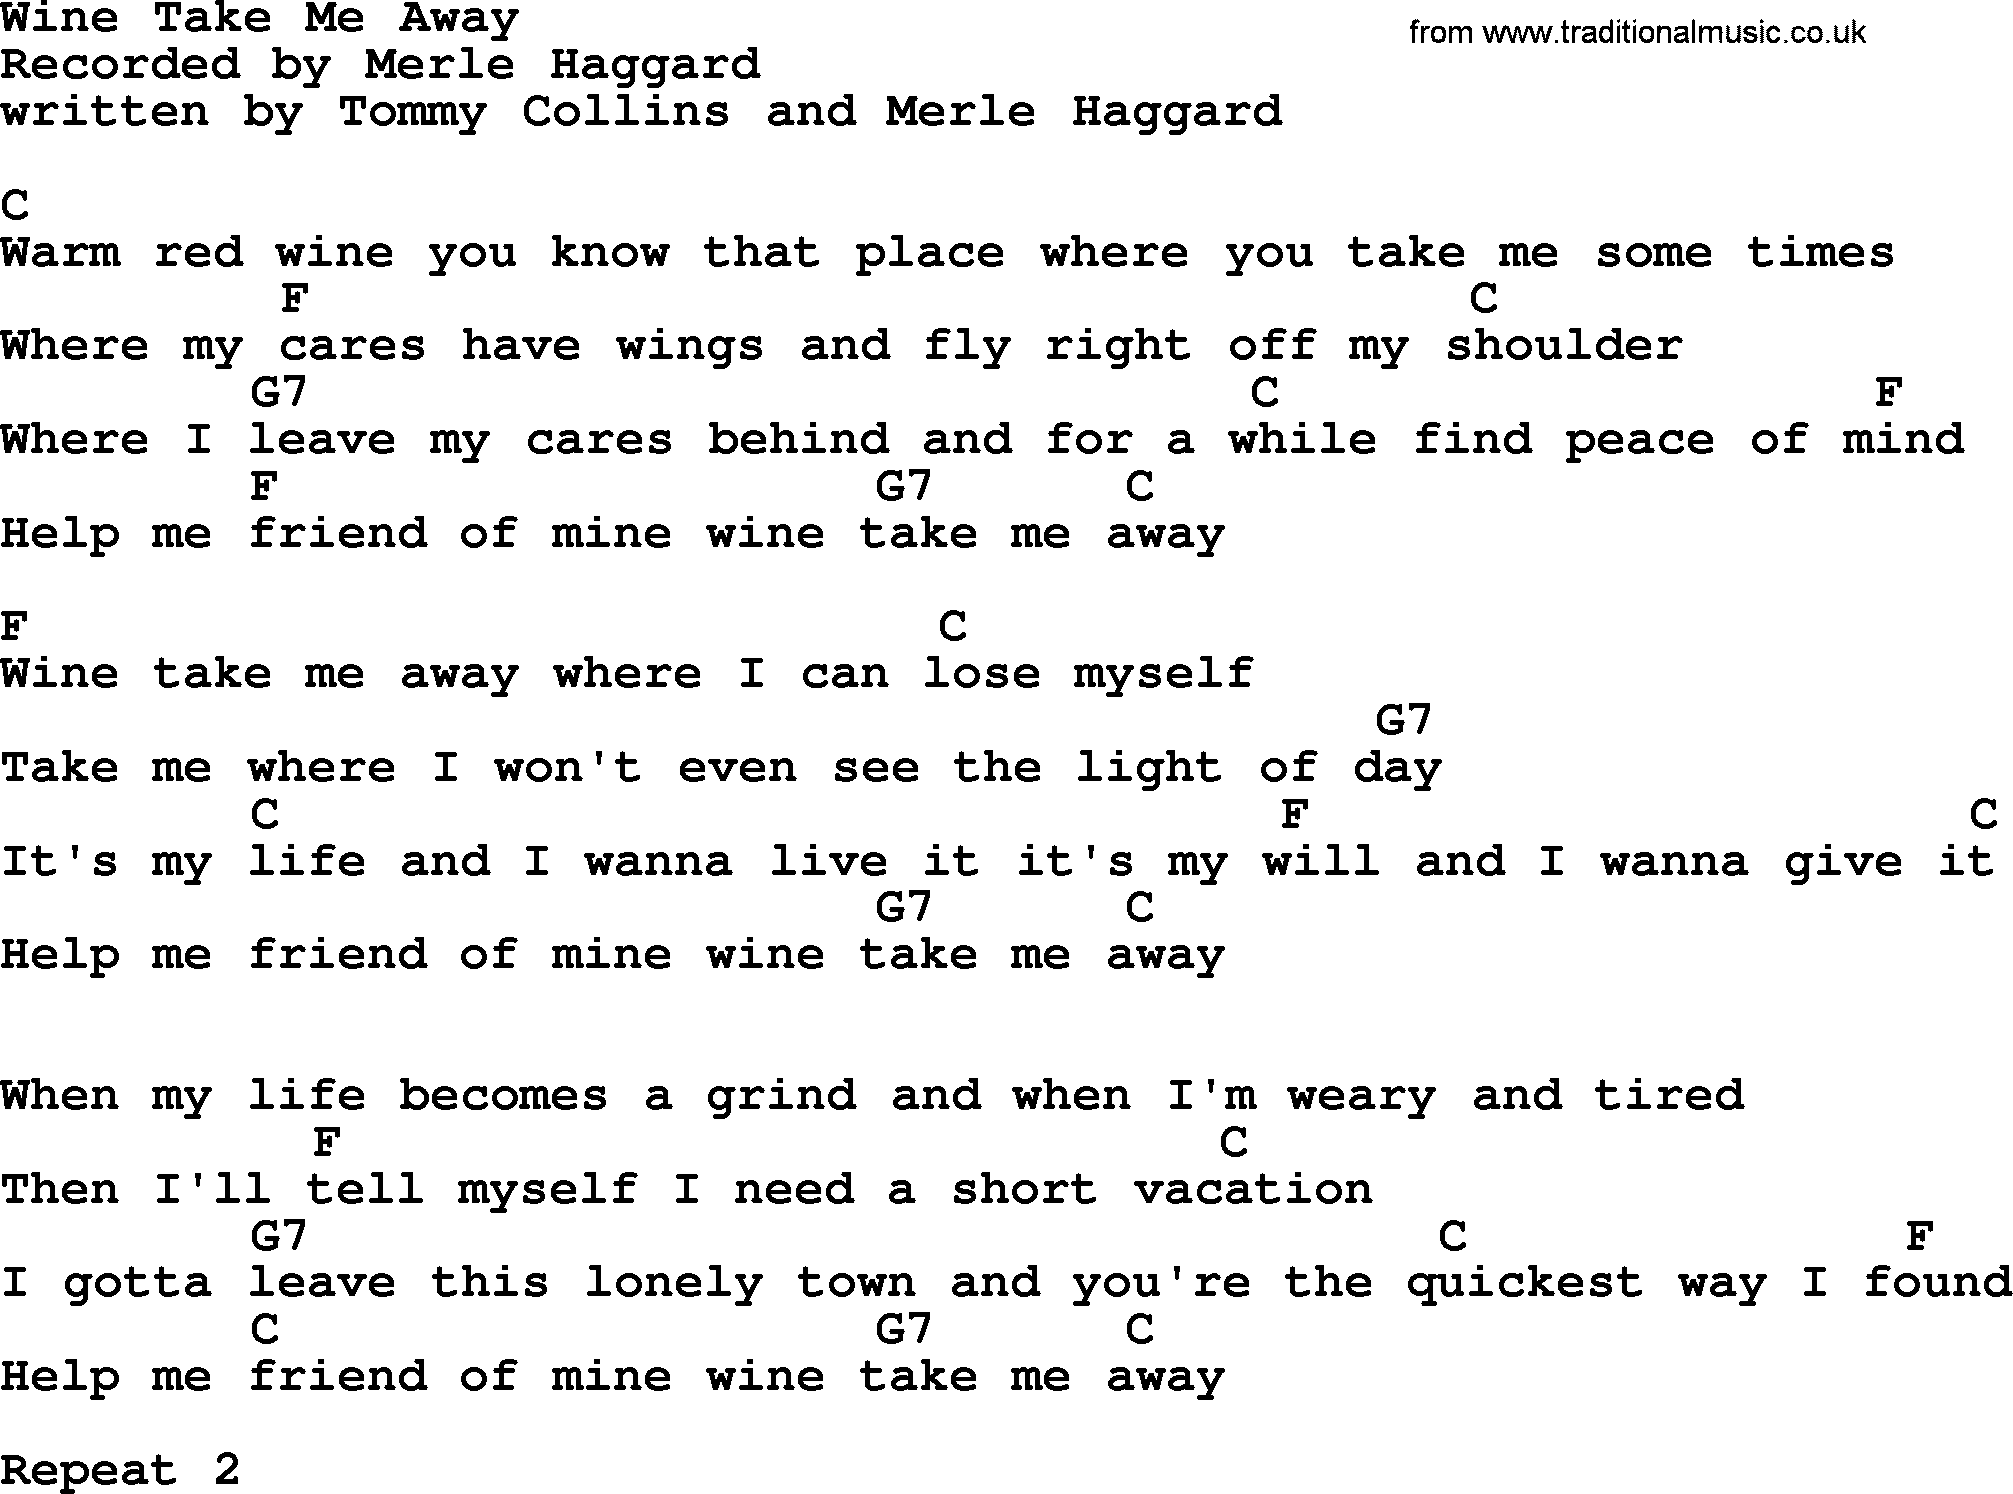 Merle Haggard song: Wine Take Me Away, lyrics and chords